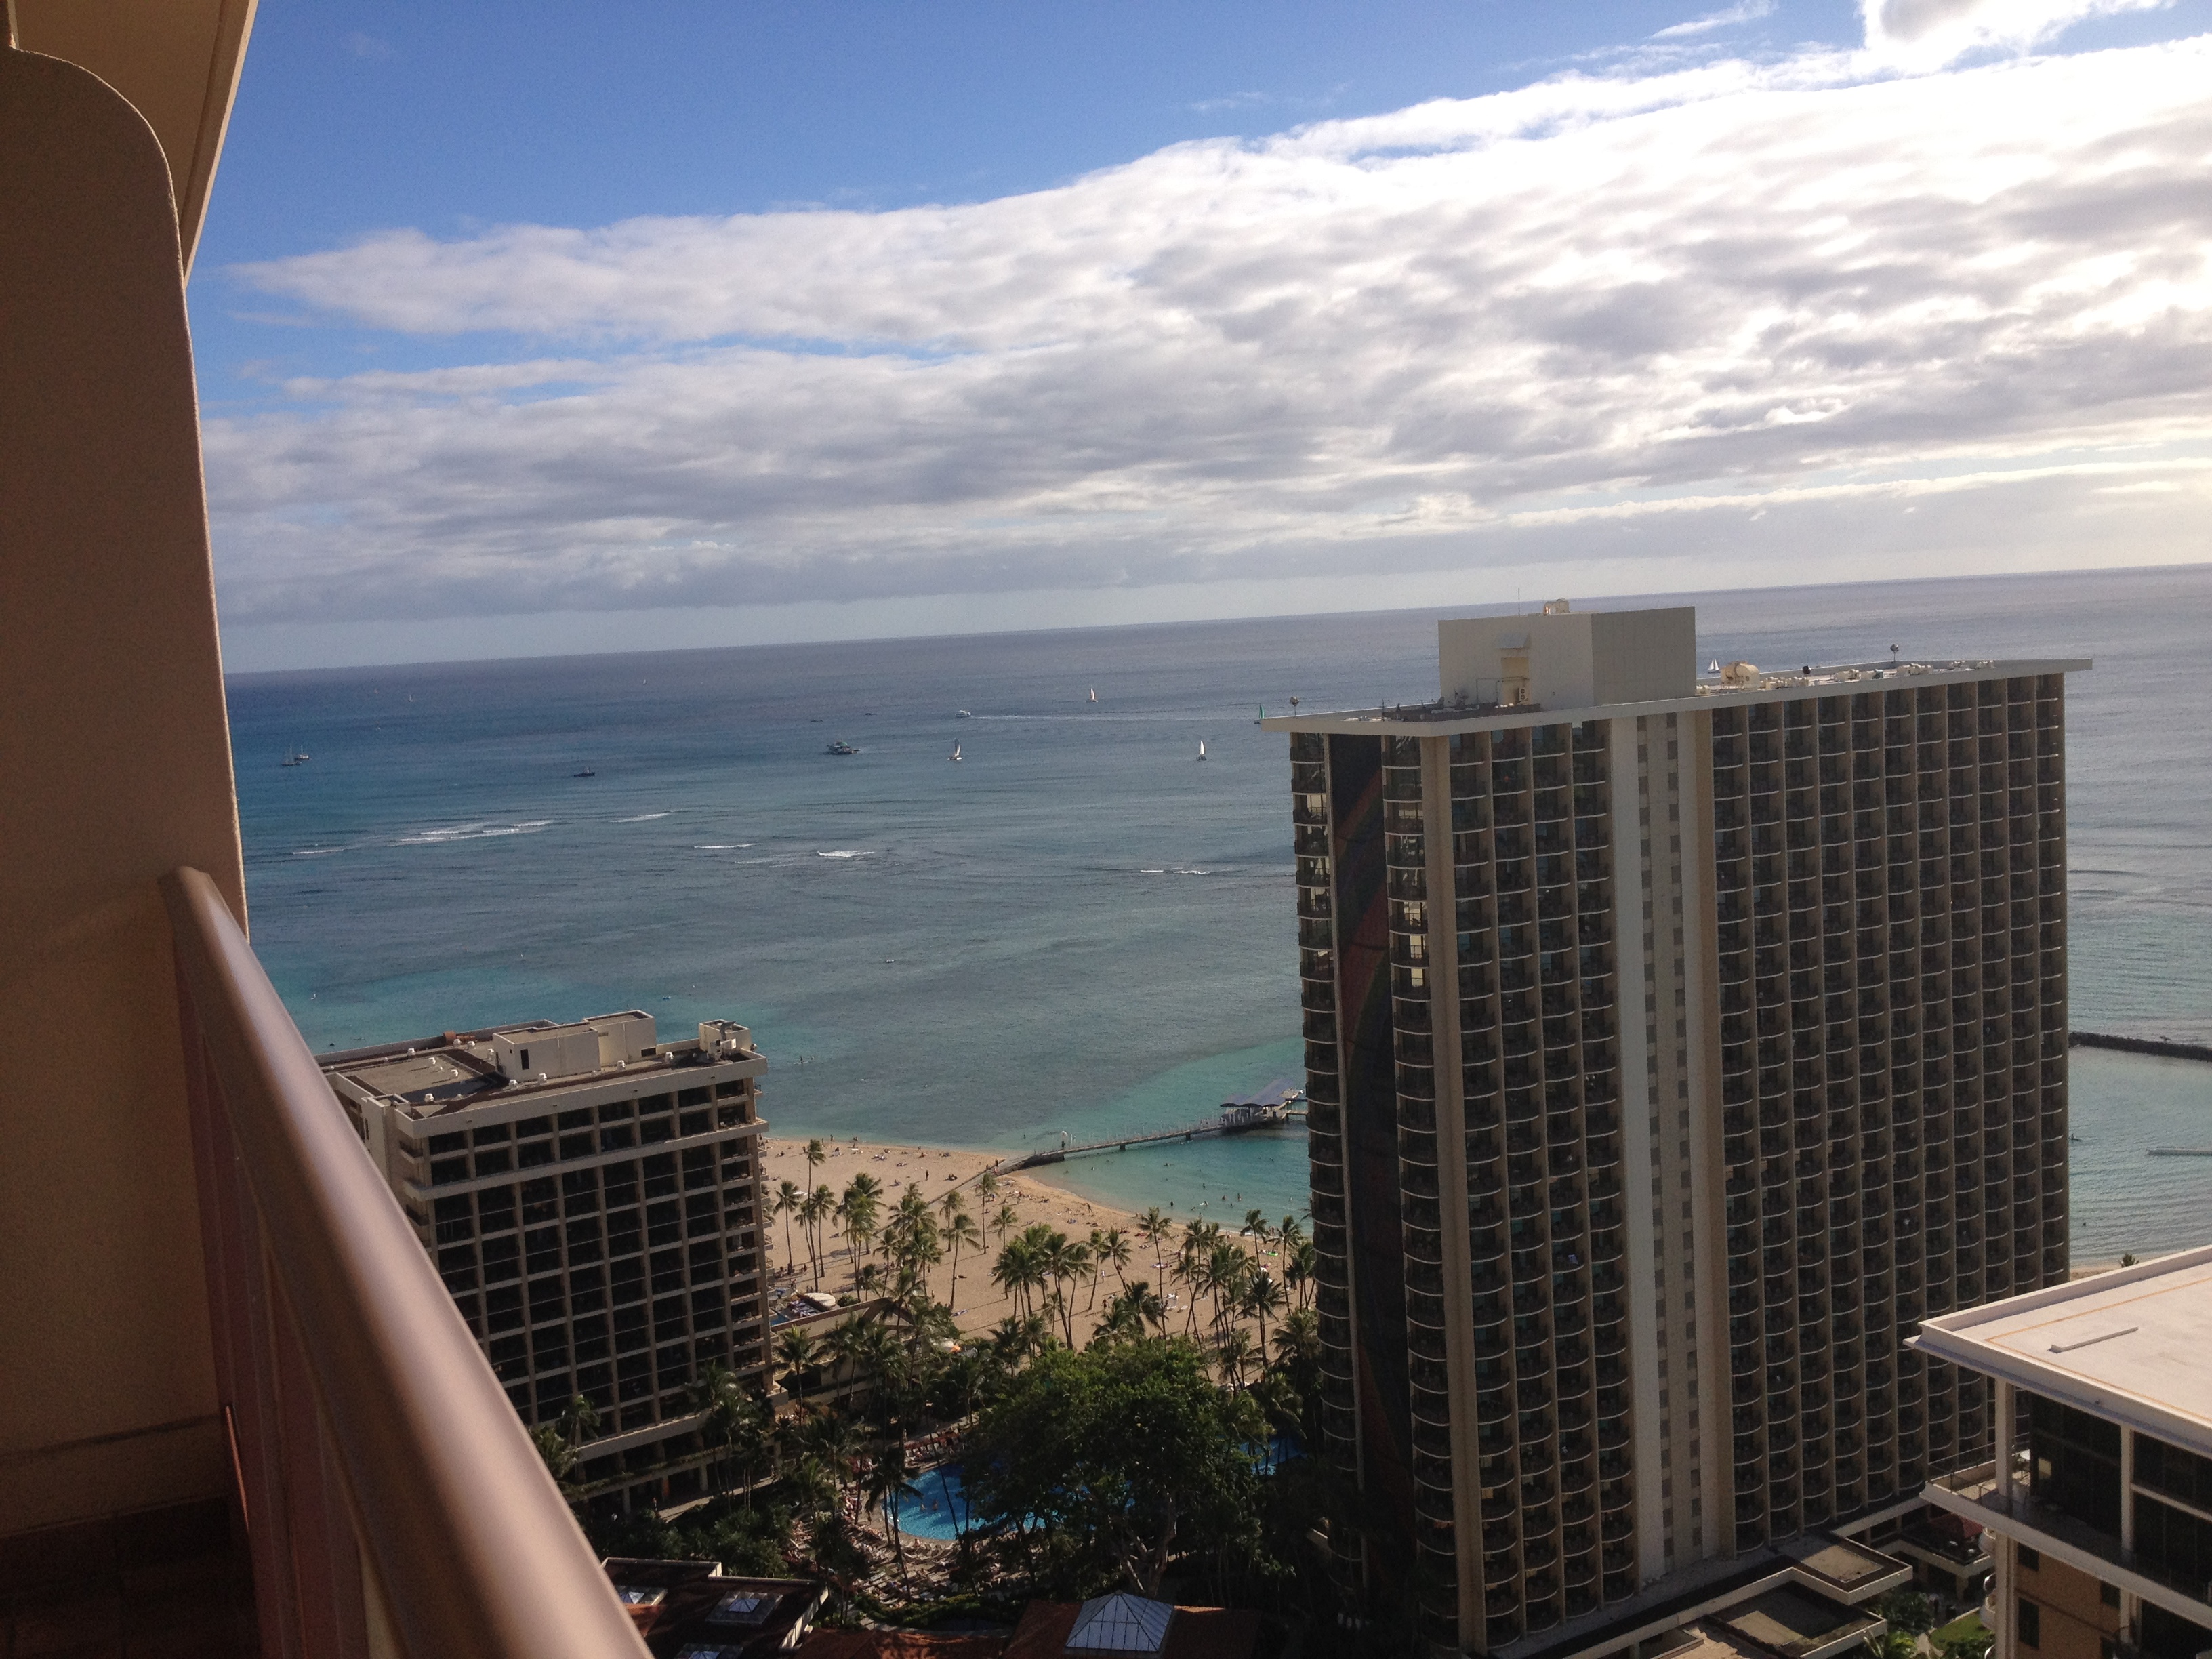 Honolulu Hilton Grand Waikikian